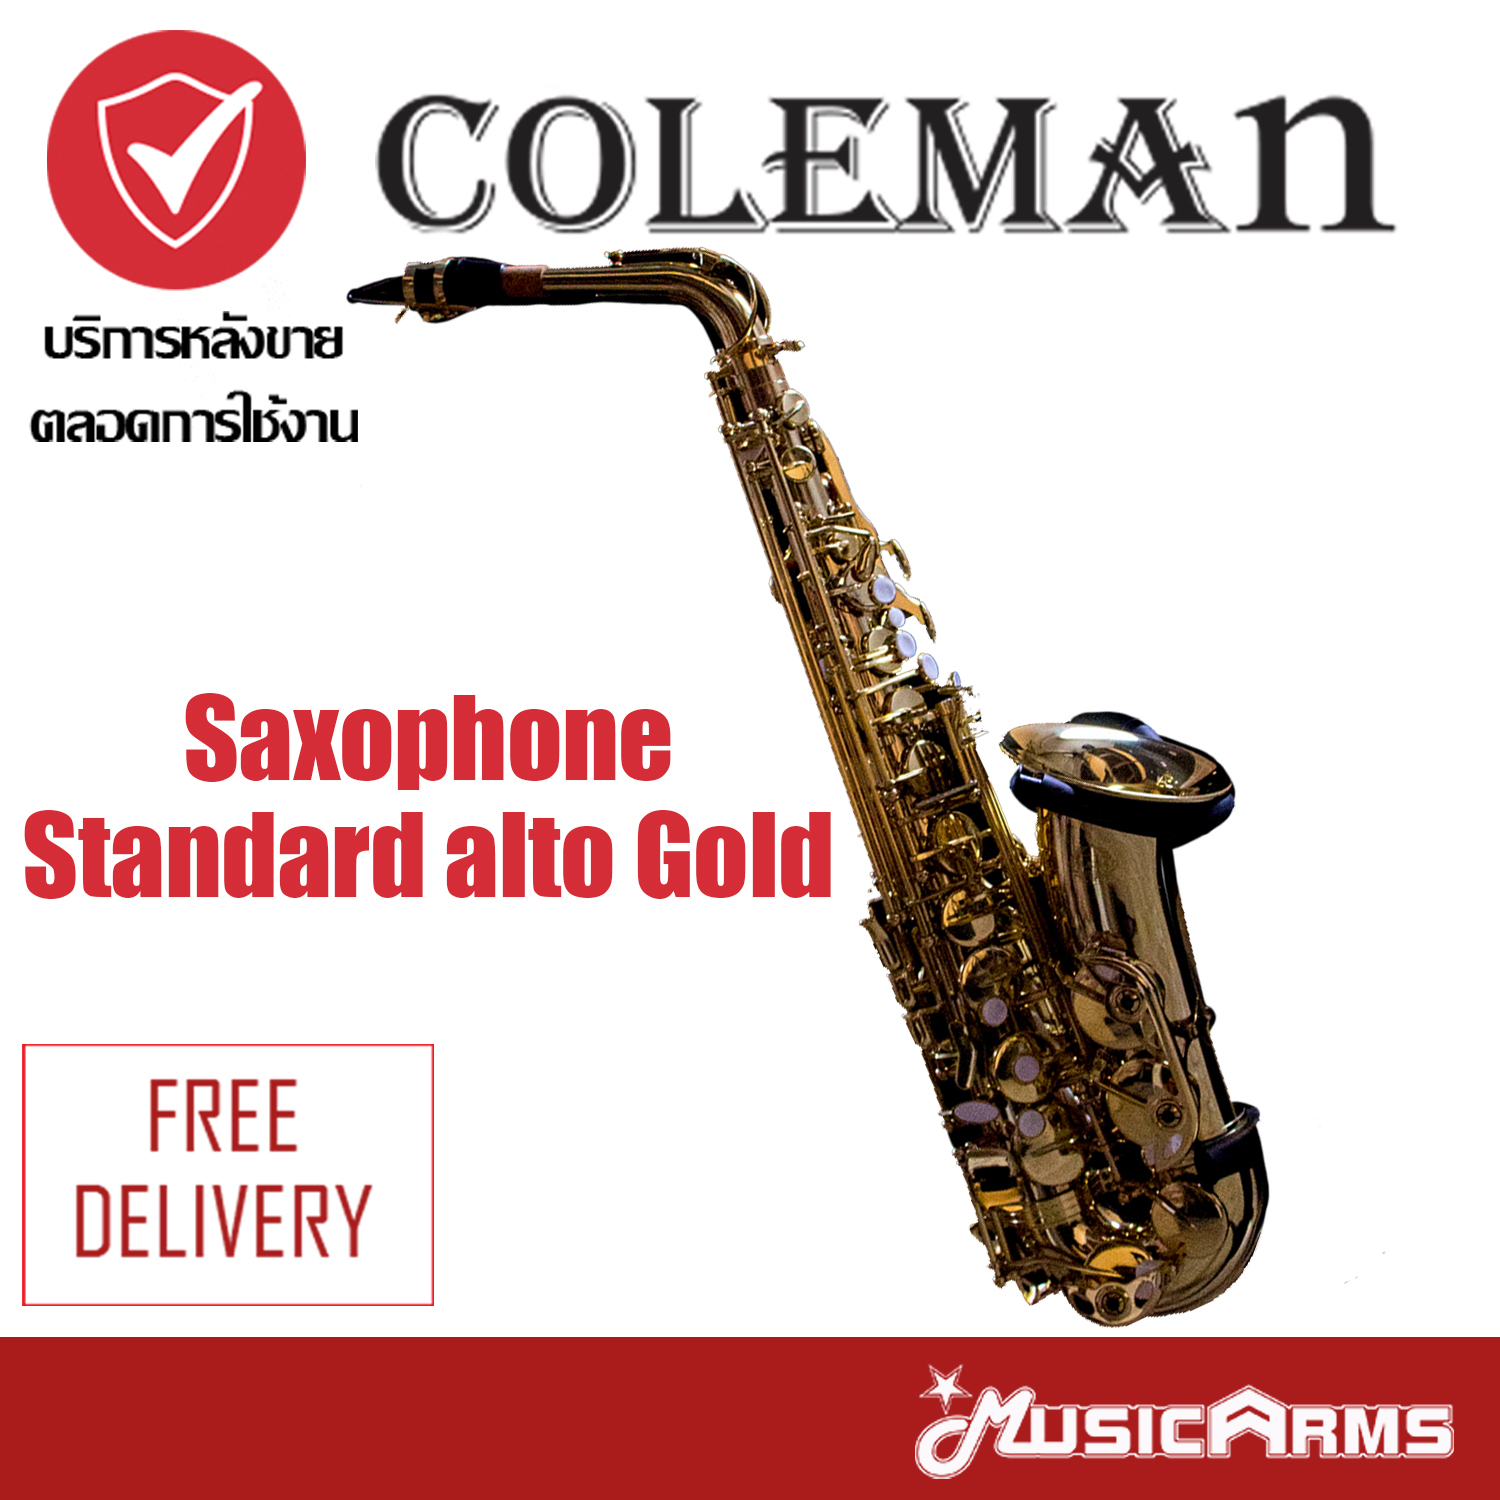 Saxophone Coleman Standard alto Gold แซ็กโซโฟน Music Arms